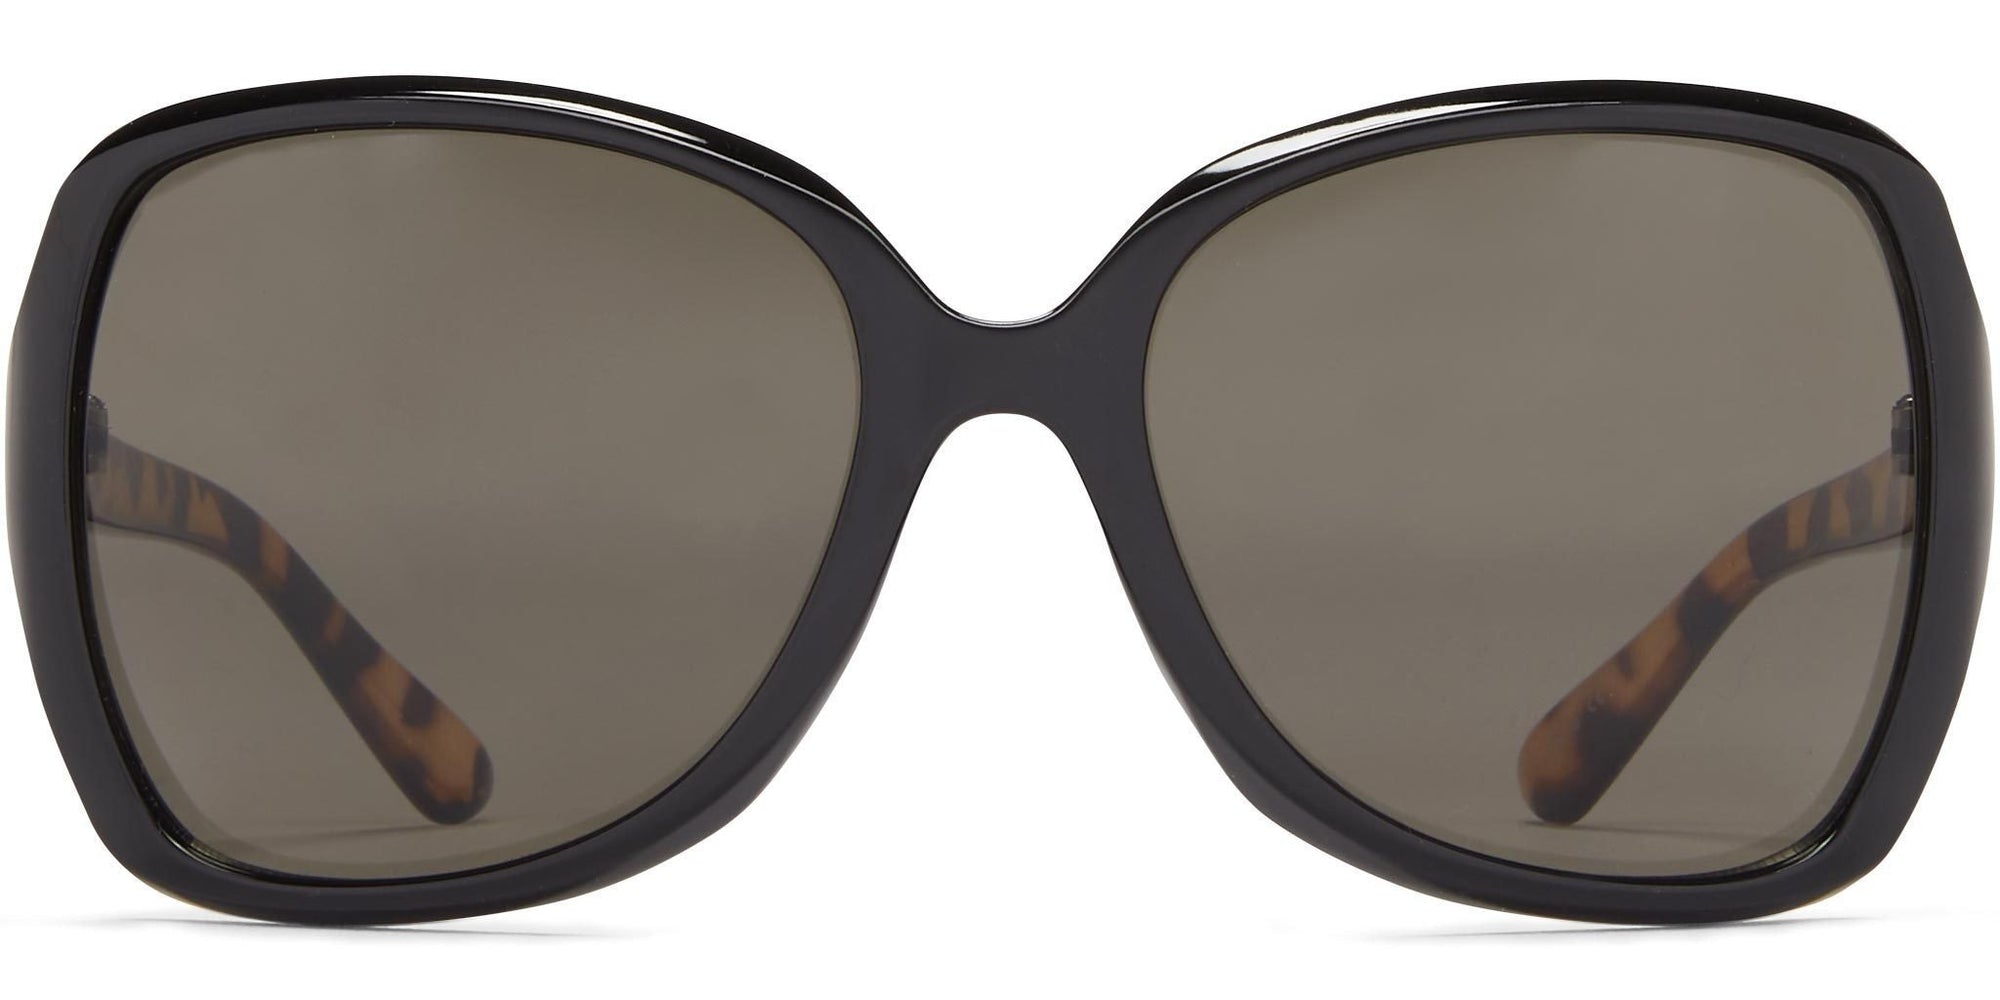 Pompano - Shiny Black/Tortoise/Gray Lens - Sunglasses